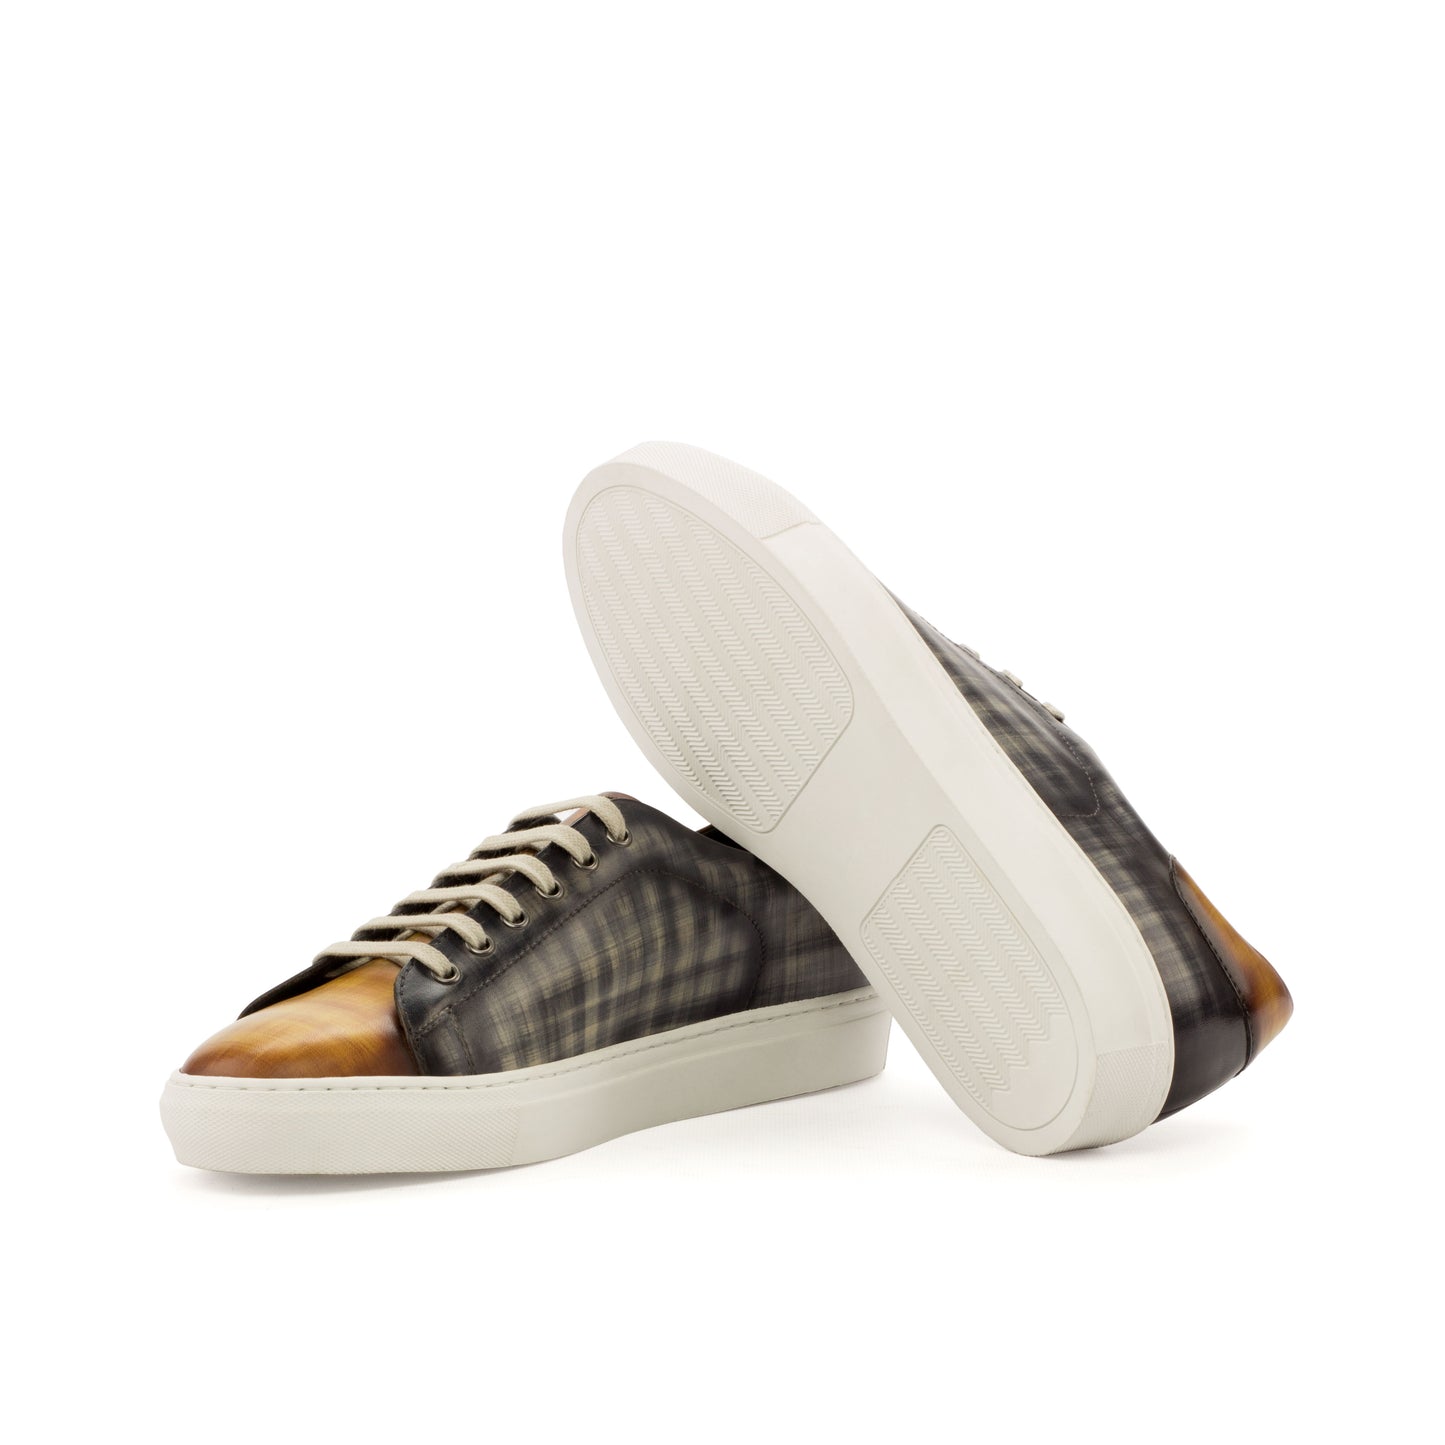 Sneakers Papiro patina grey & cognac leather